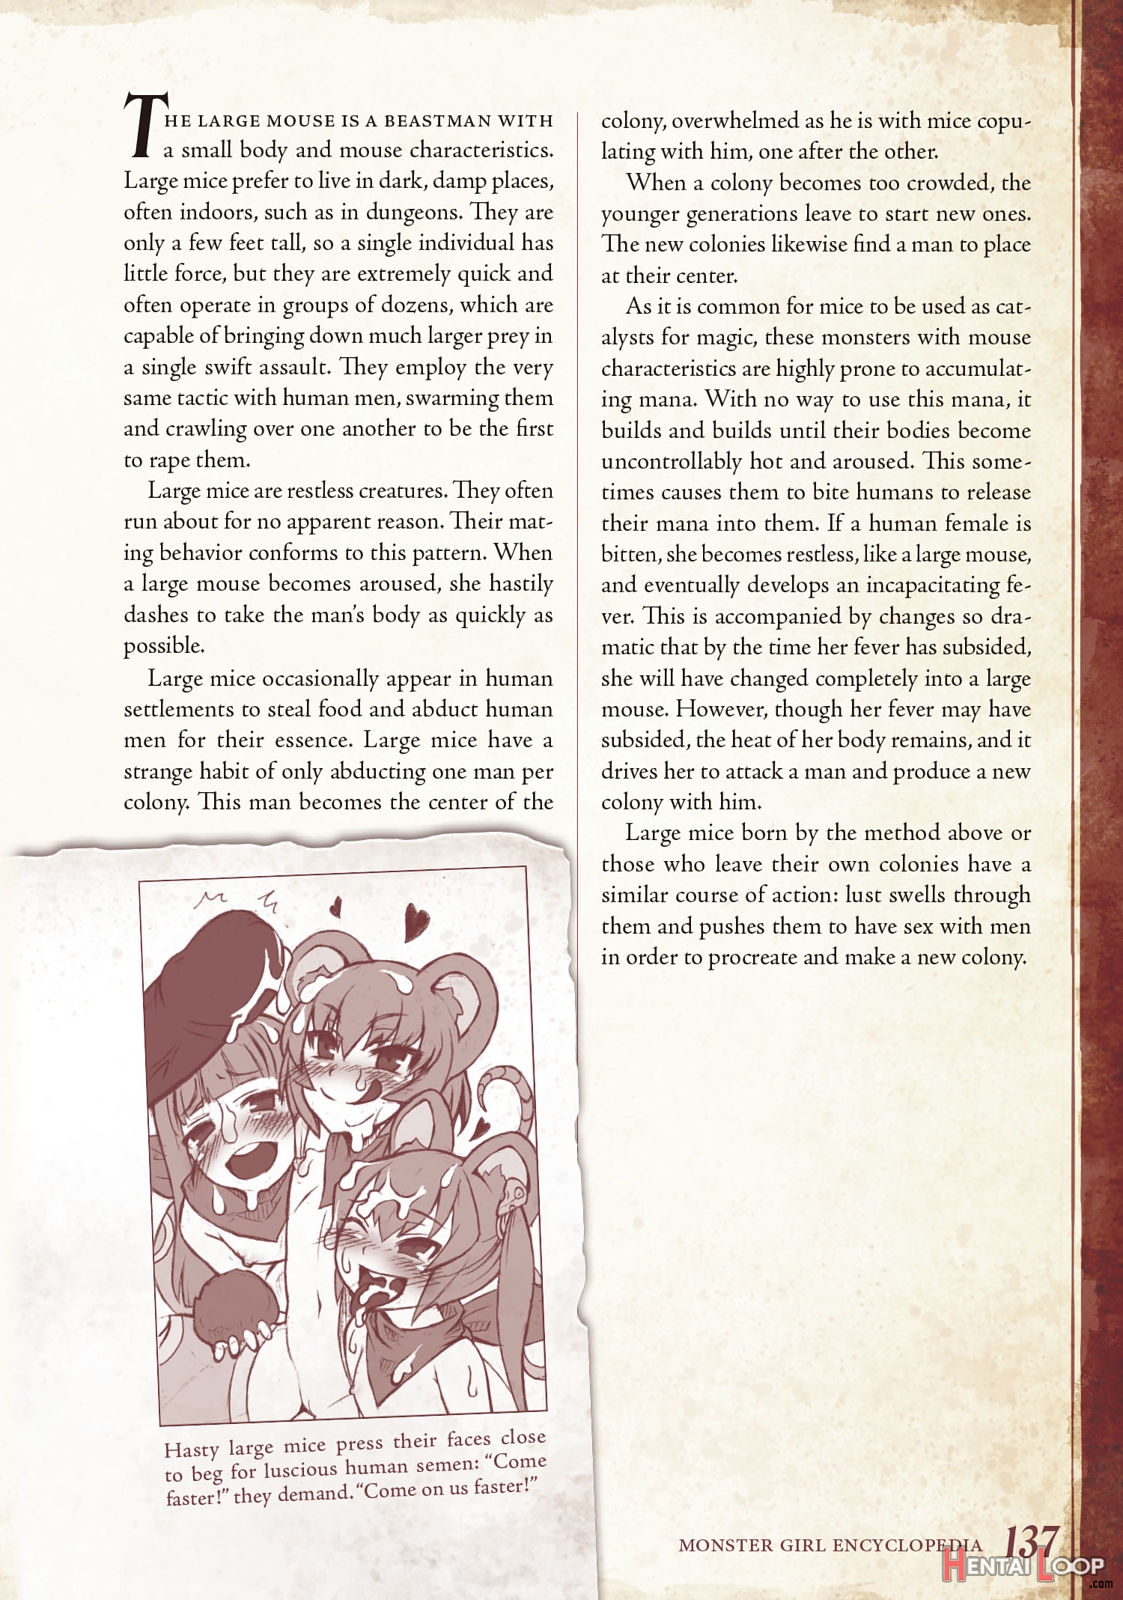 Monster Girl Encyclopedia Vol. 1 page 138